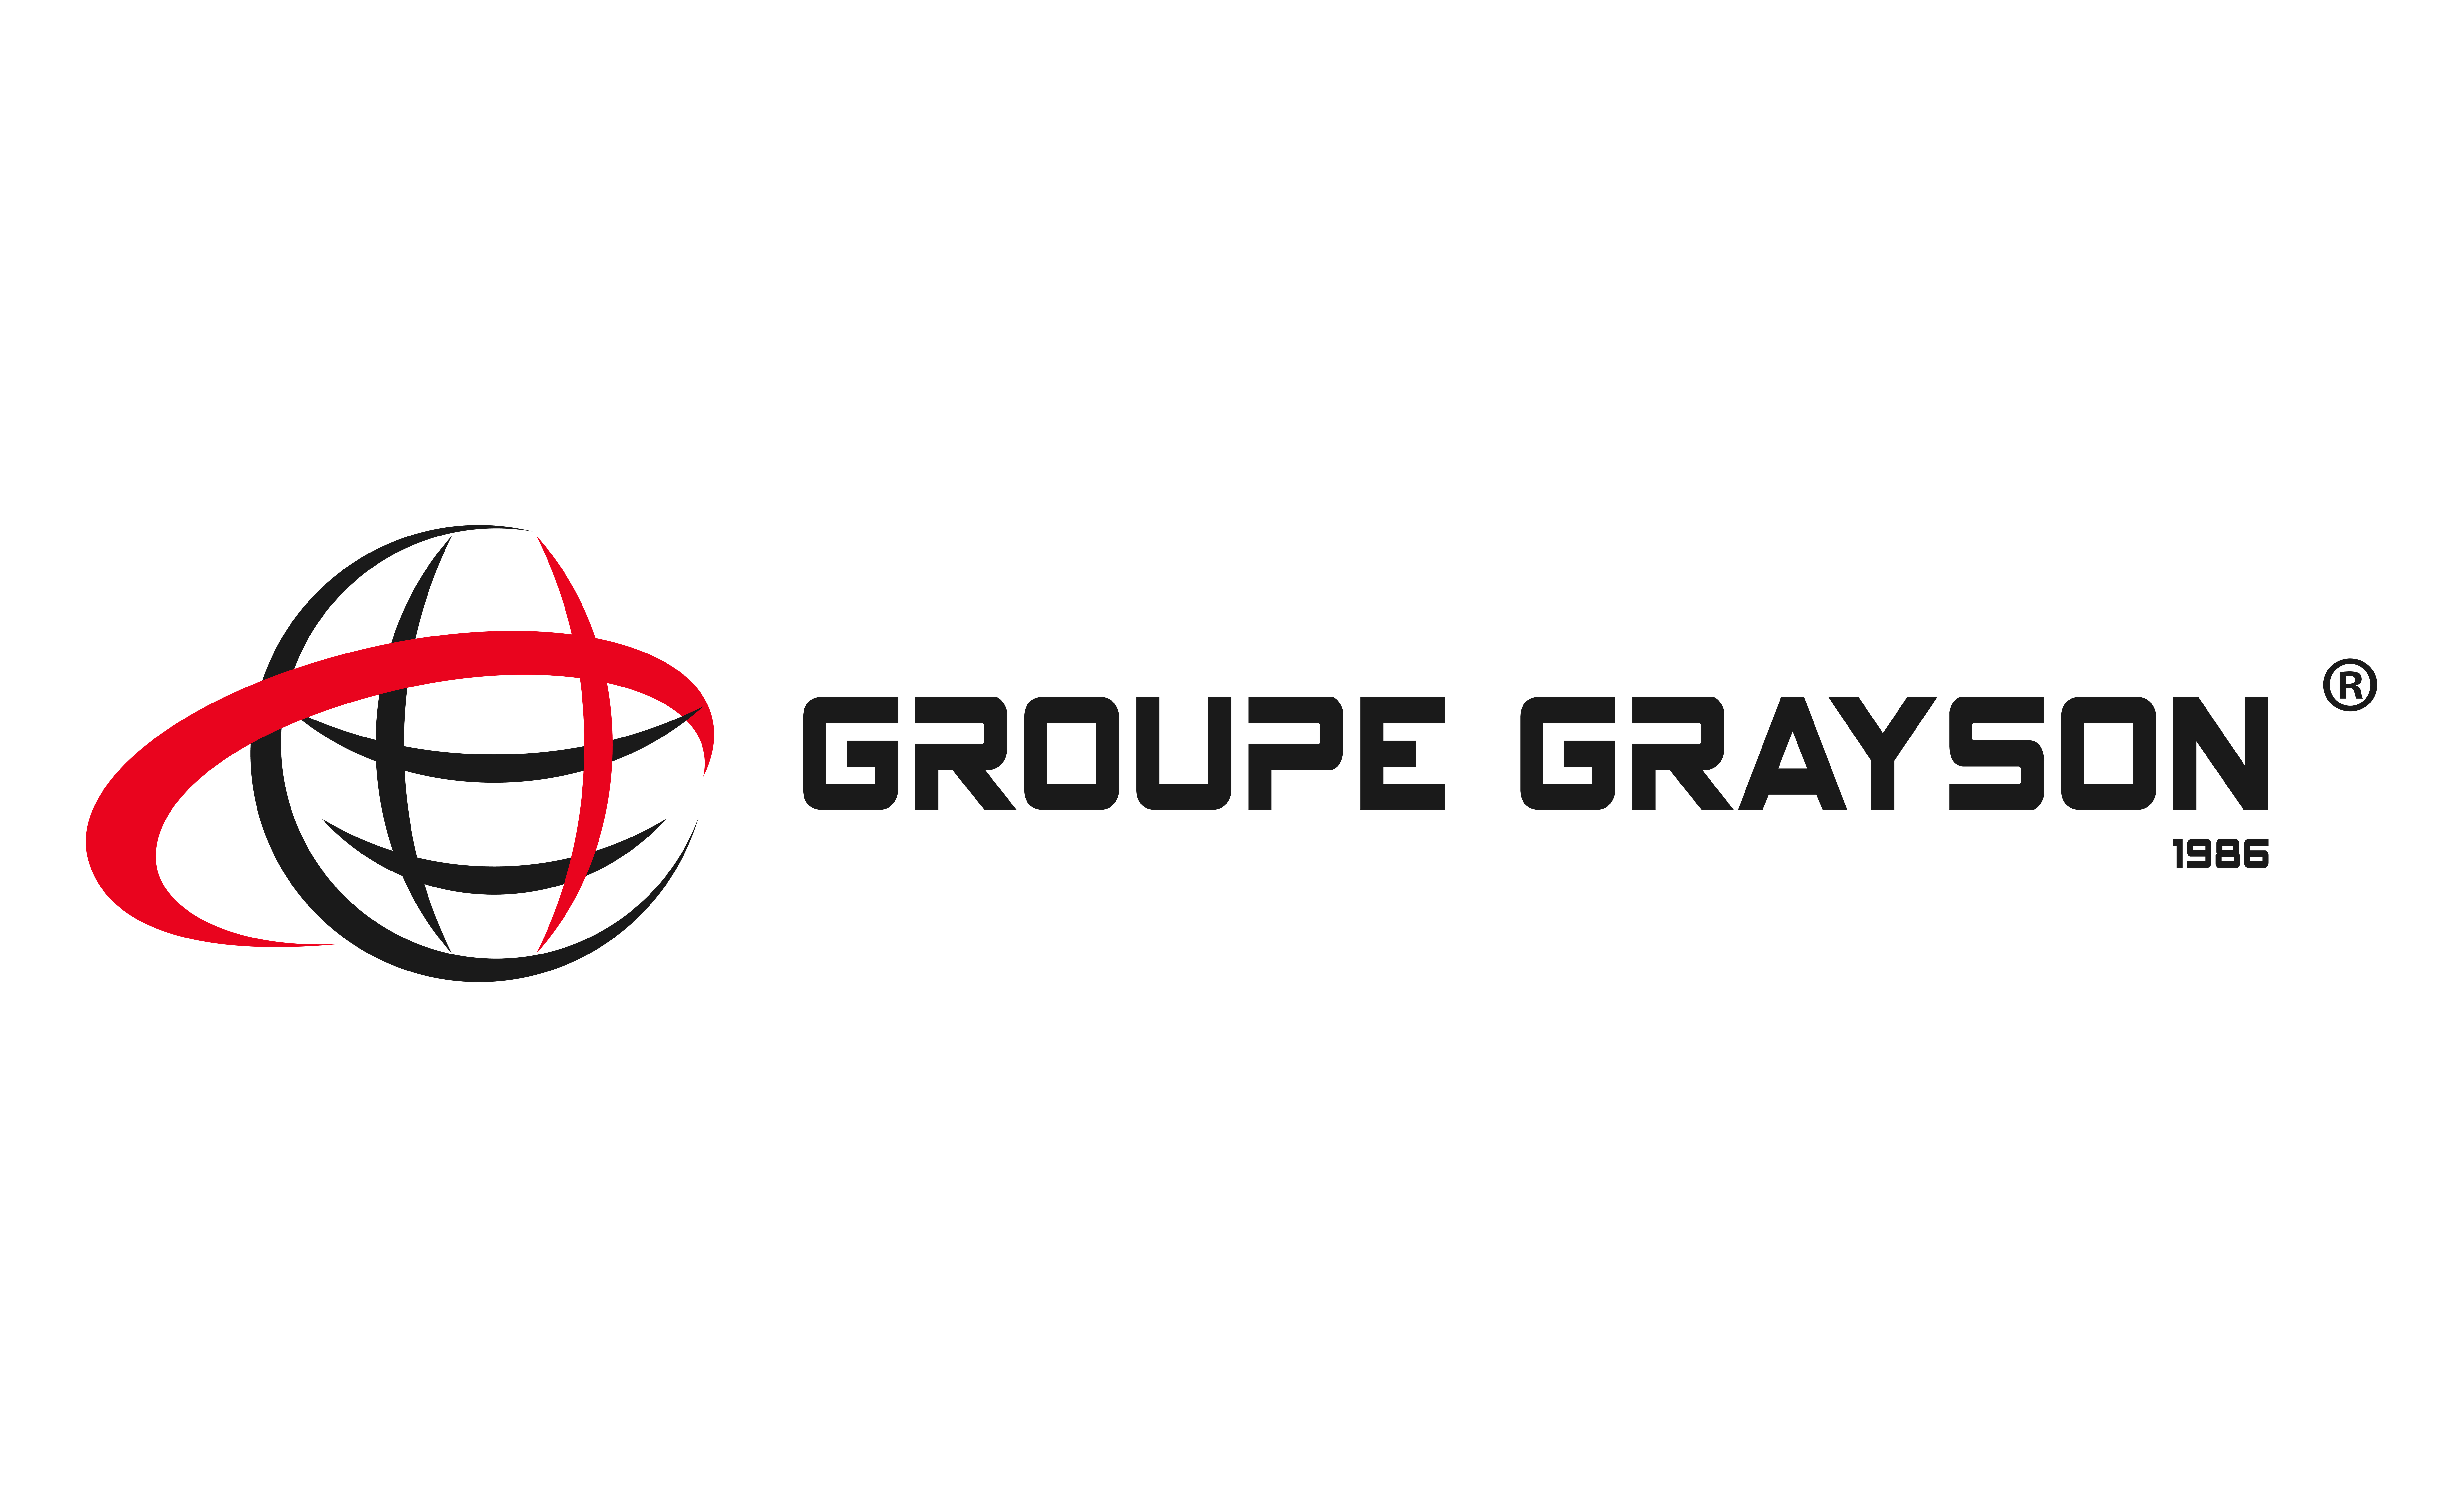 Groupe Grayson